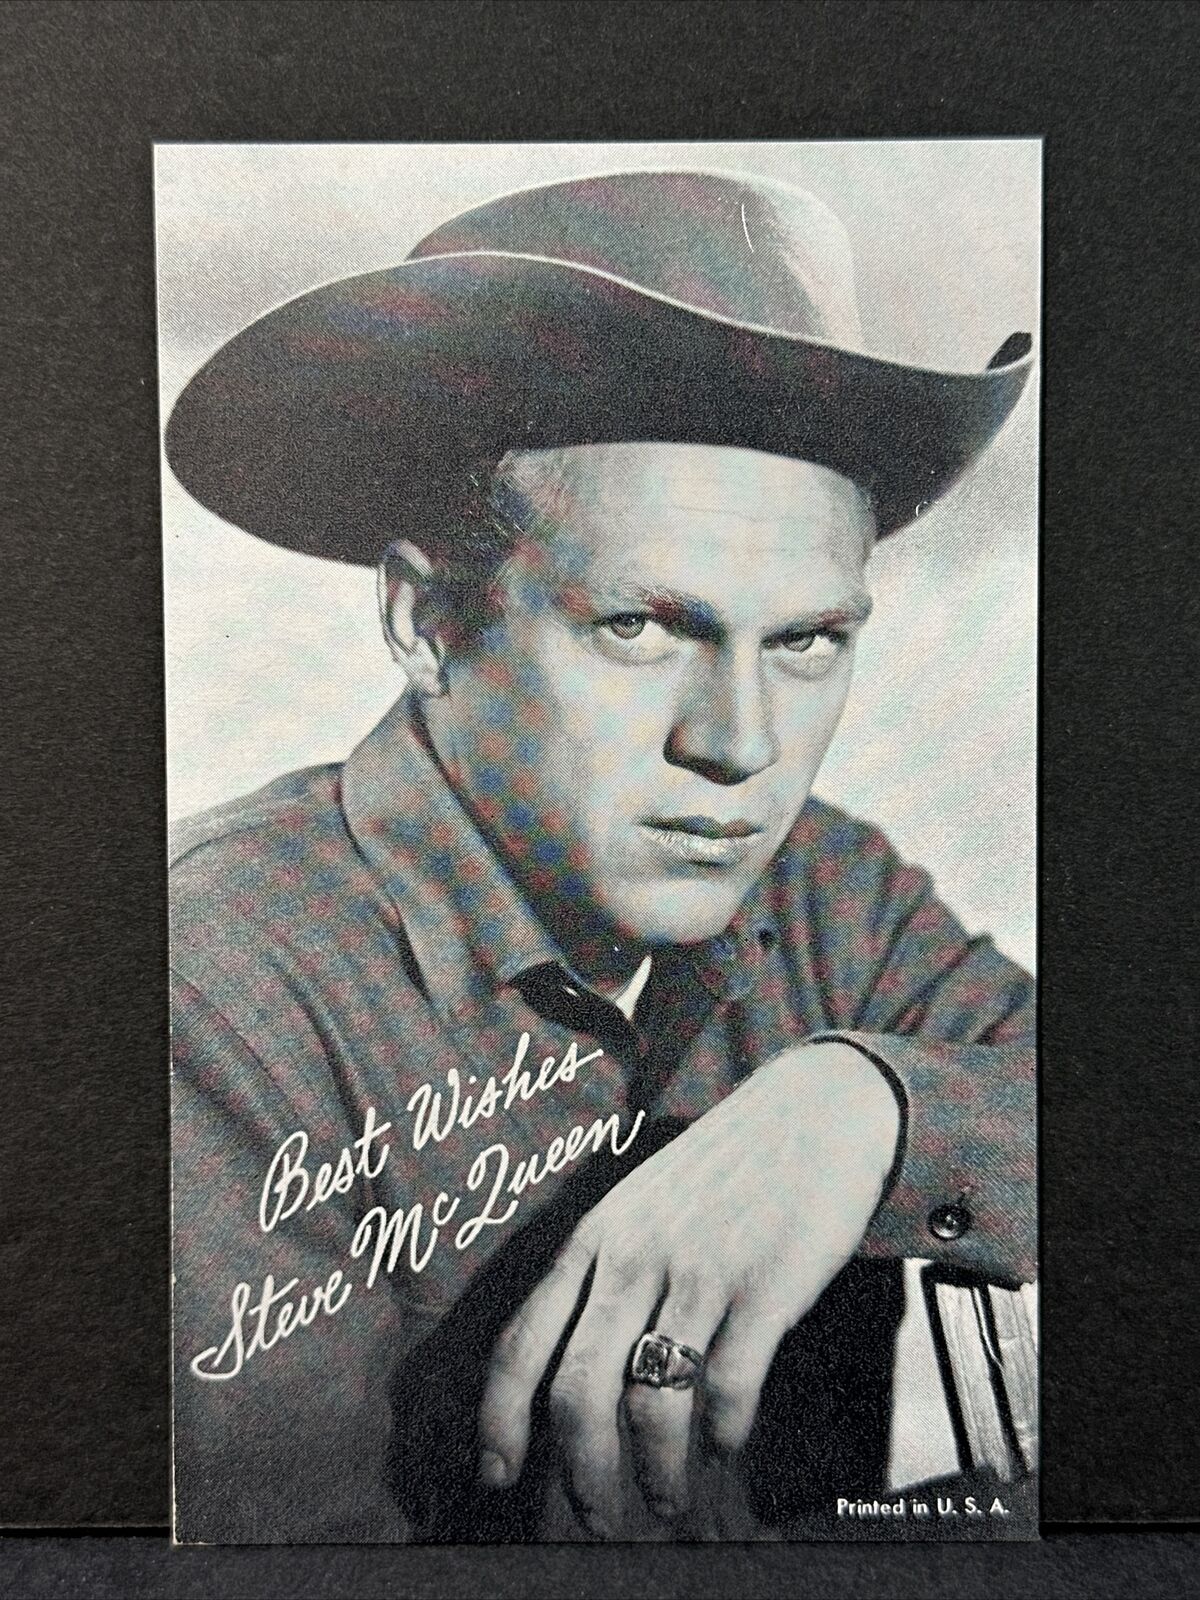 Steve McQueen 1950s HOLLYWOOD & POPULAR COWBOY WESTERN ACTOR STAR Arcade Card